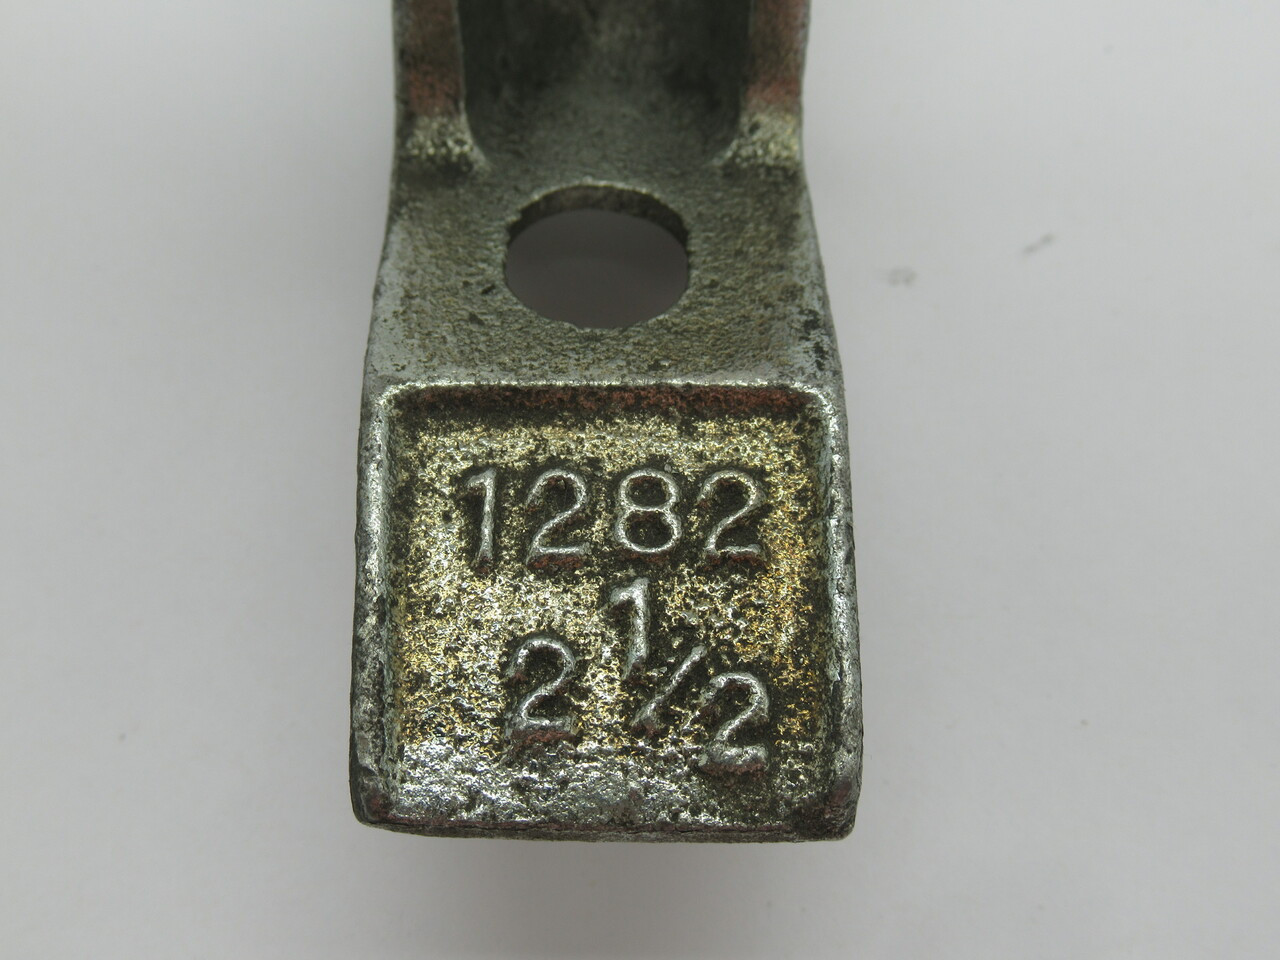 Thomas & Betts 1282 Iron Pipe Strap 2-1/2" USED